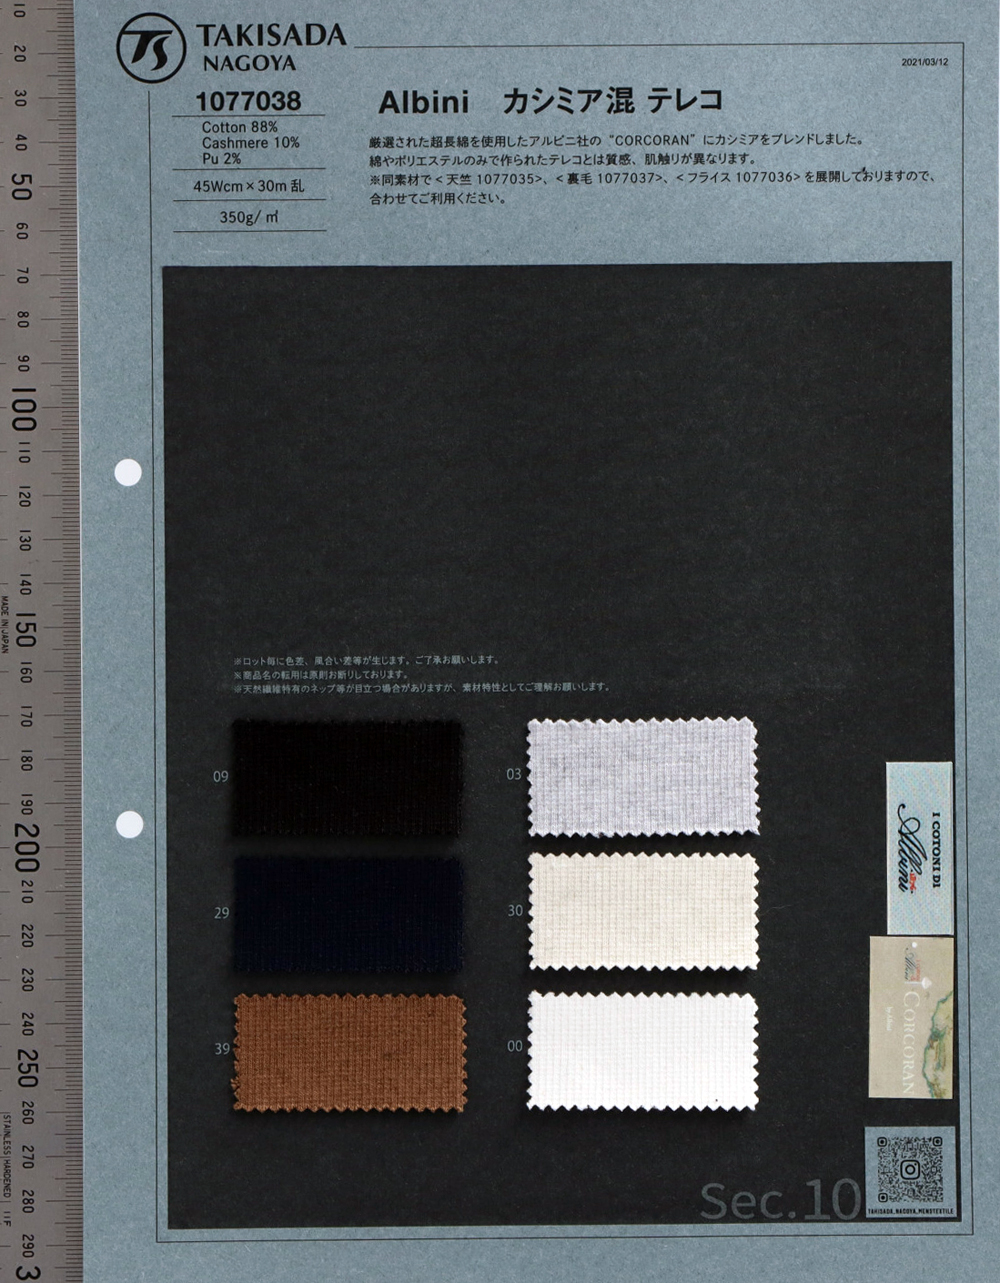 1077038 ALBINI Cotton Cashmere Tereko[Textile] Takisada Nagoya Sub Photo